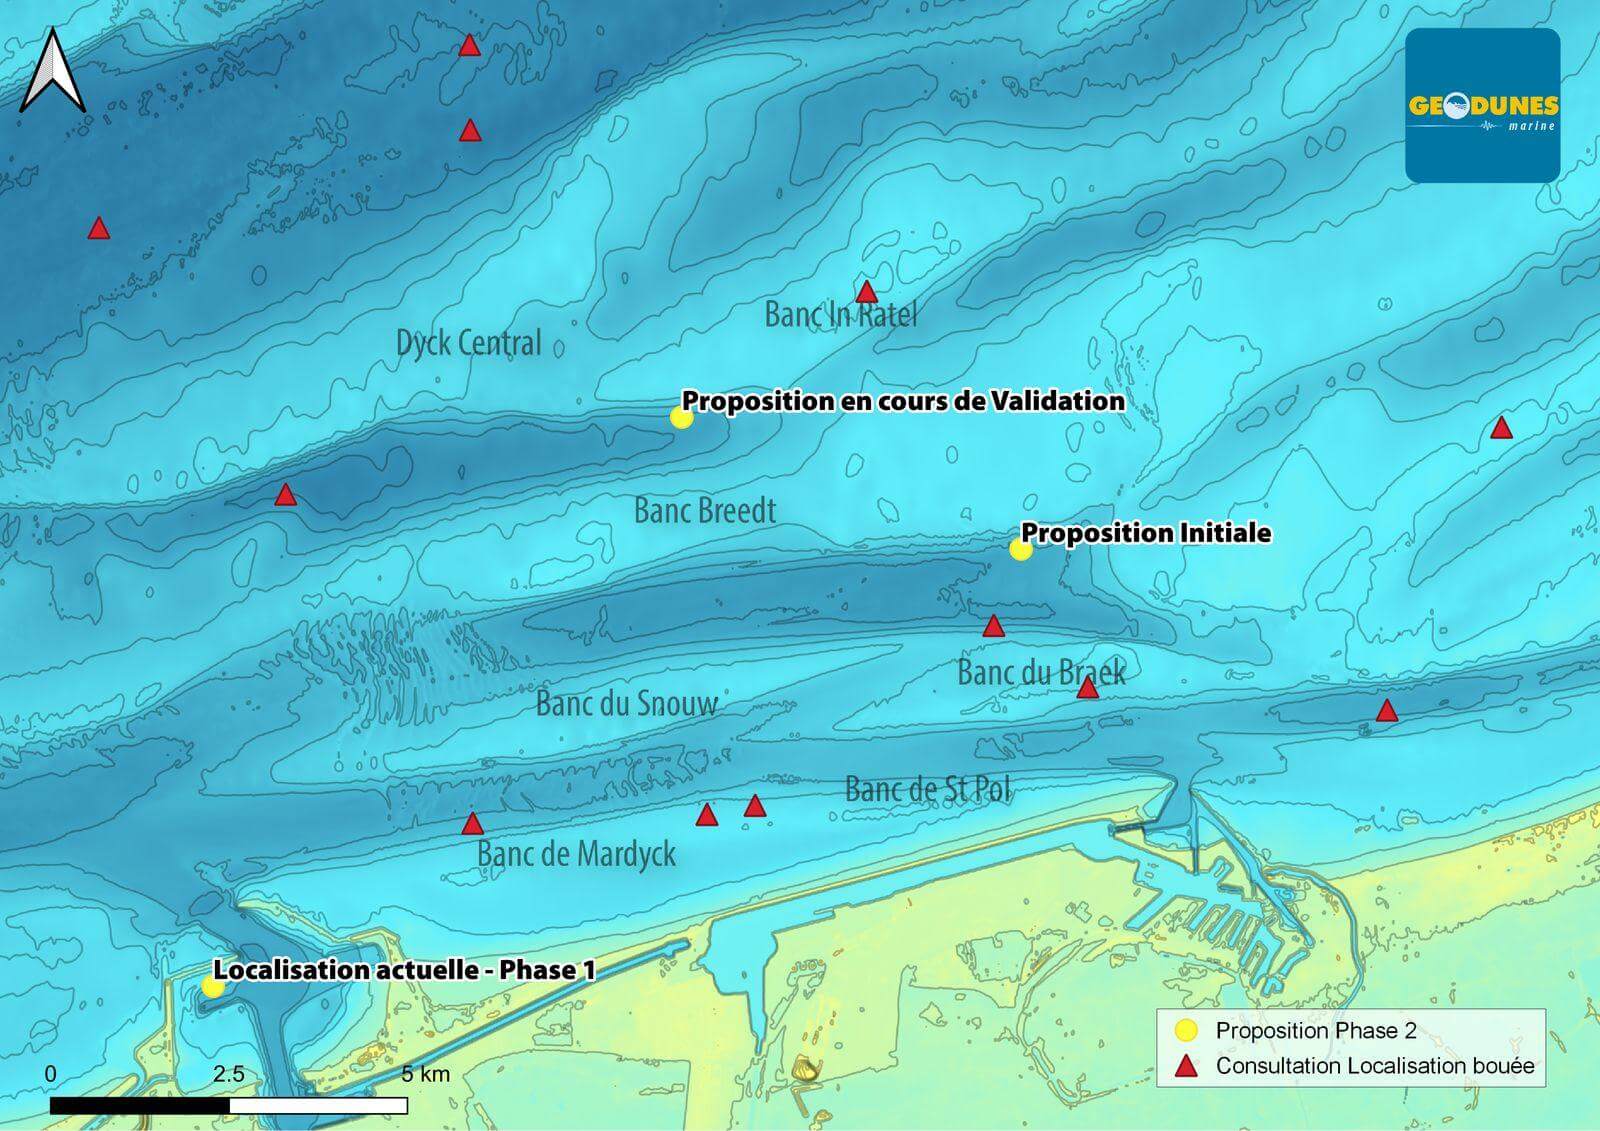 synthese-localisation-positions-bouee-geodunes-marine